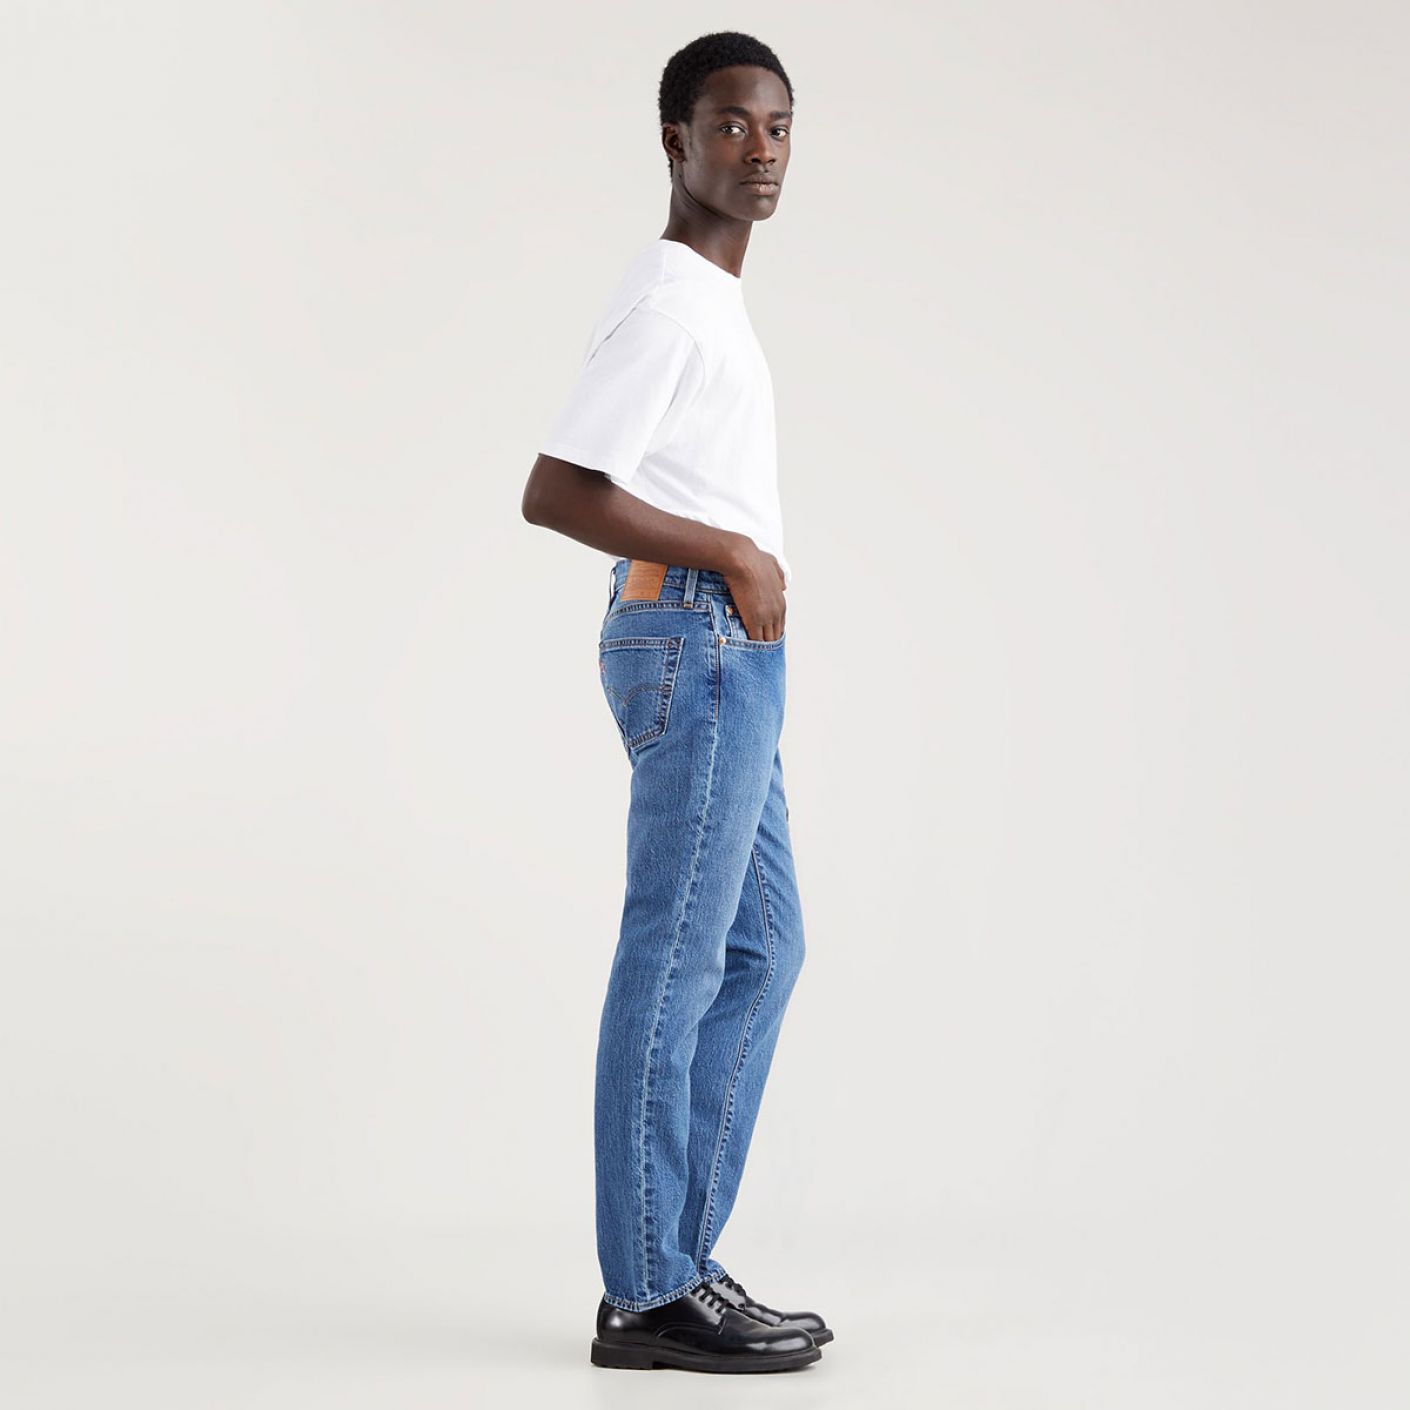 Levis Jeans 511 Slim Easy Mid - Blu